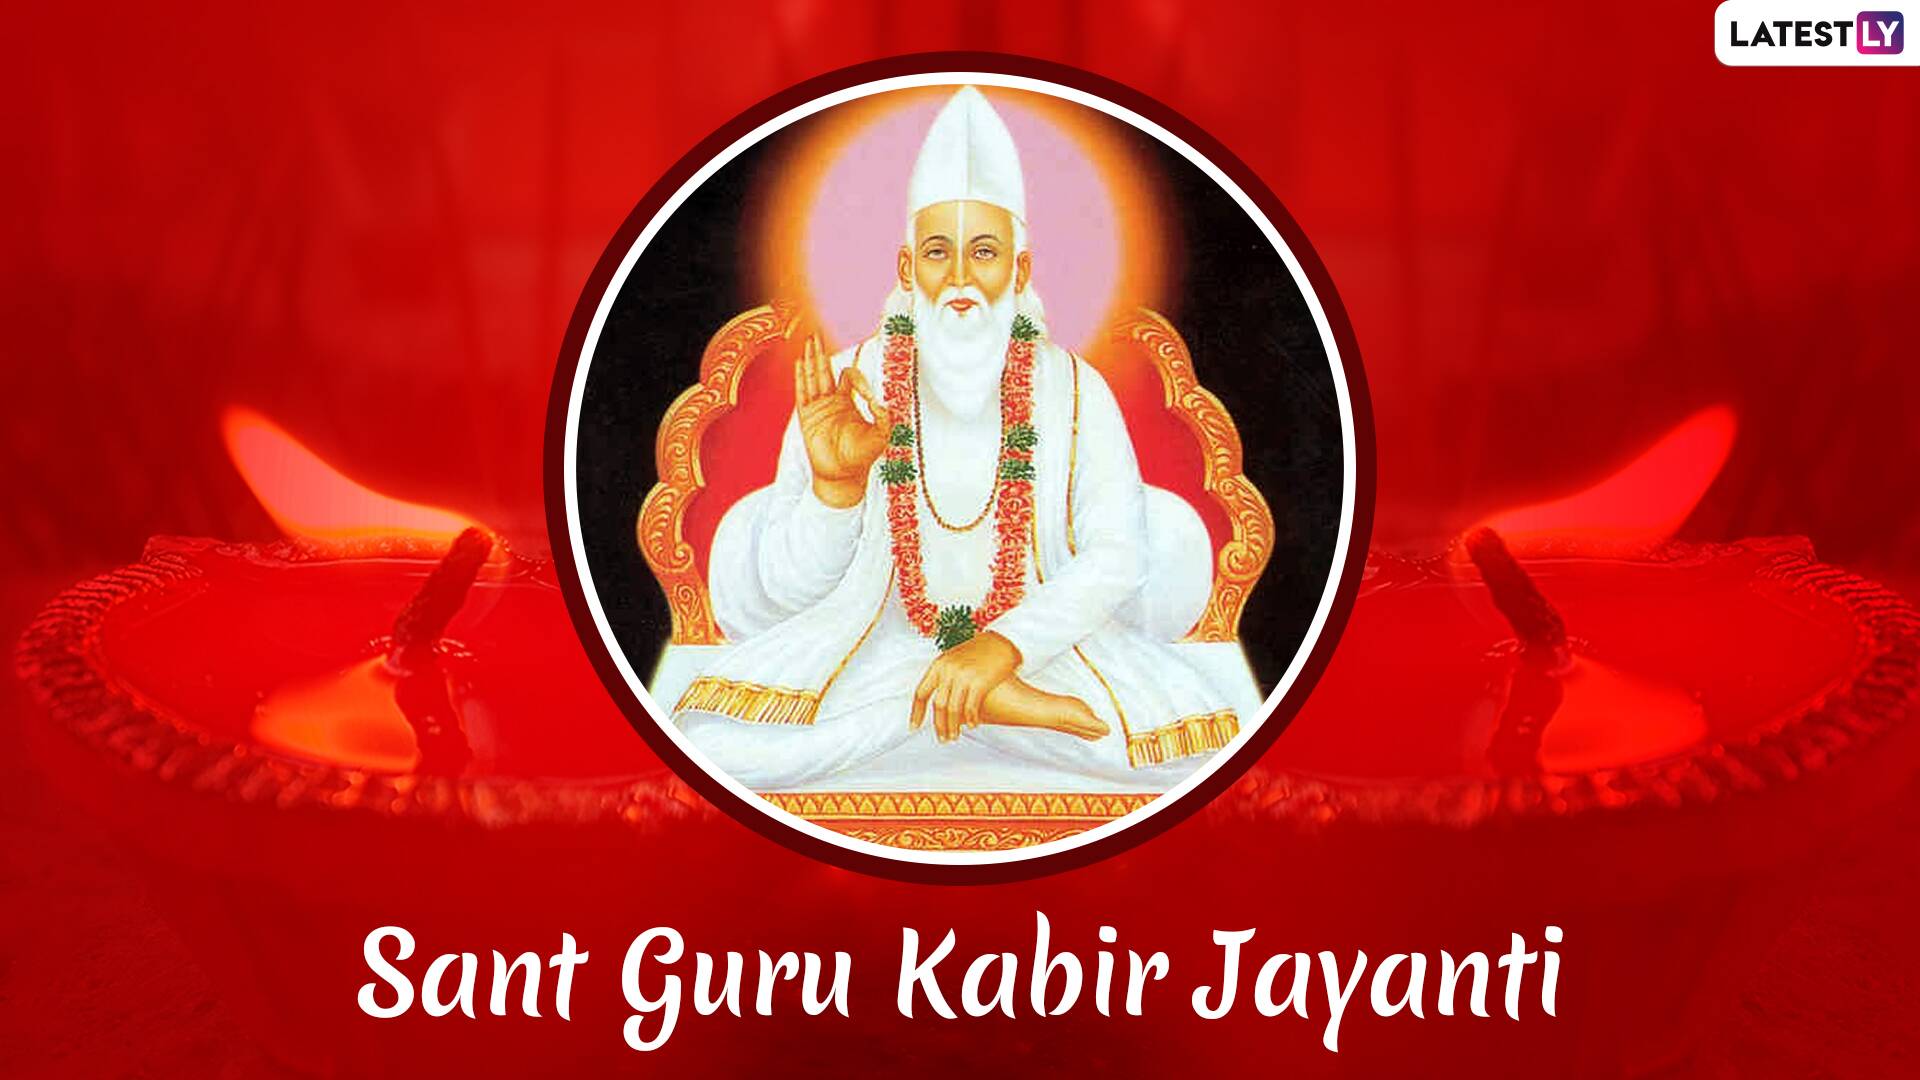 Sant Guru Kabir Das Jayanti 2019 Image & HD Wallpaper: Best